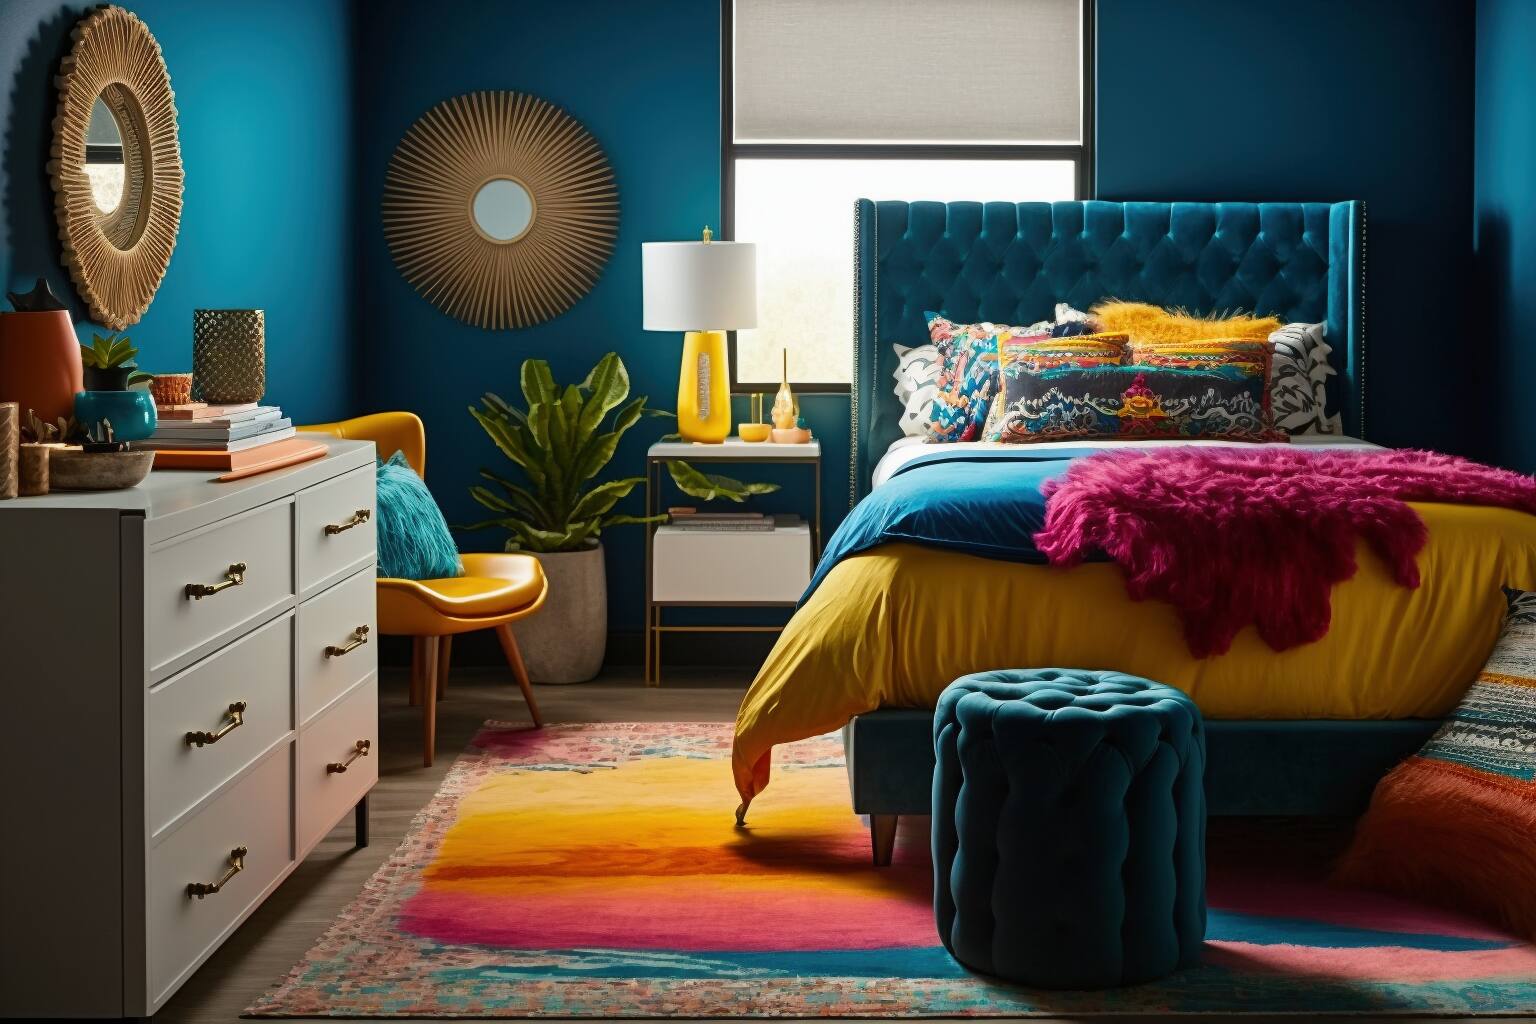 Maximalist Bedroom With Vibrant Colors Eccentric Details